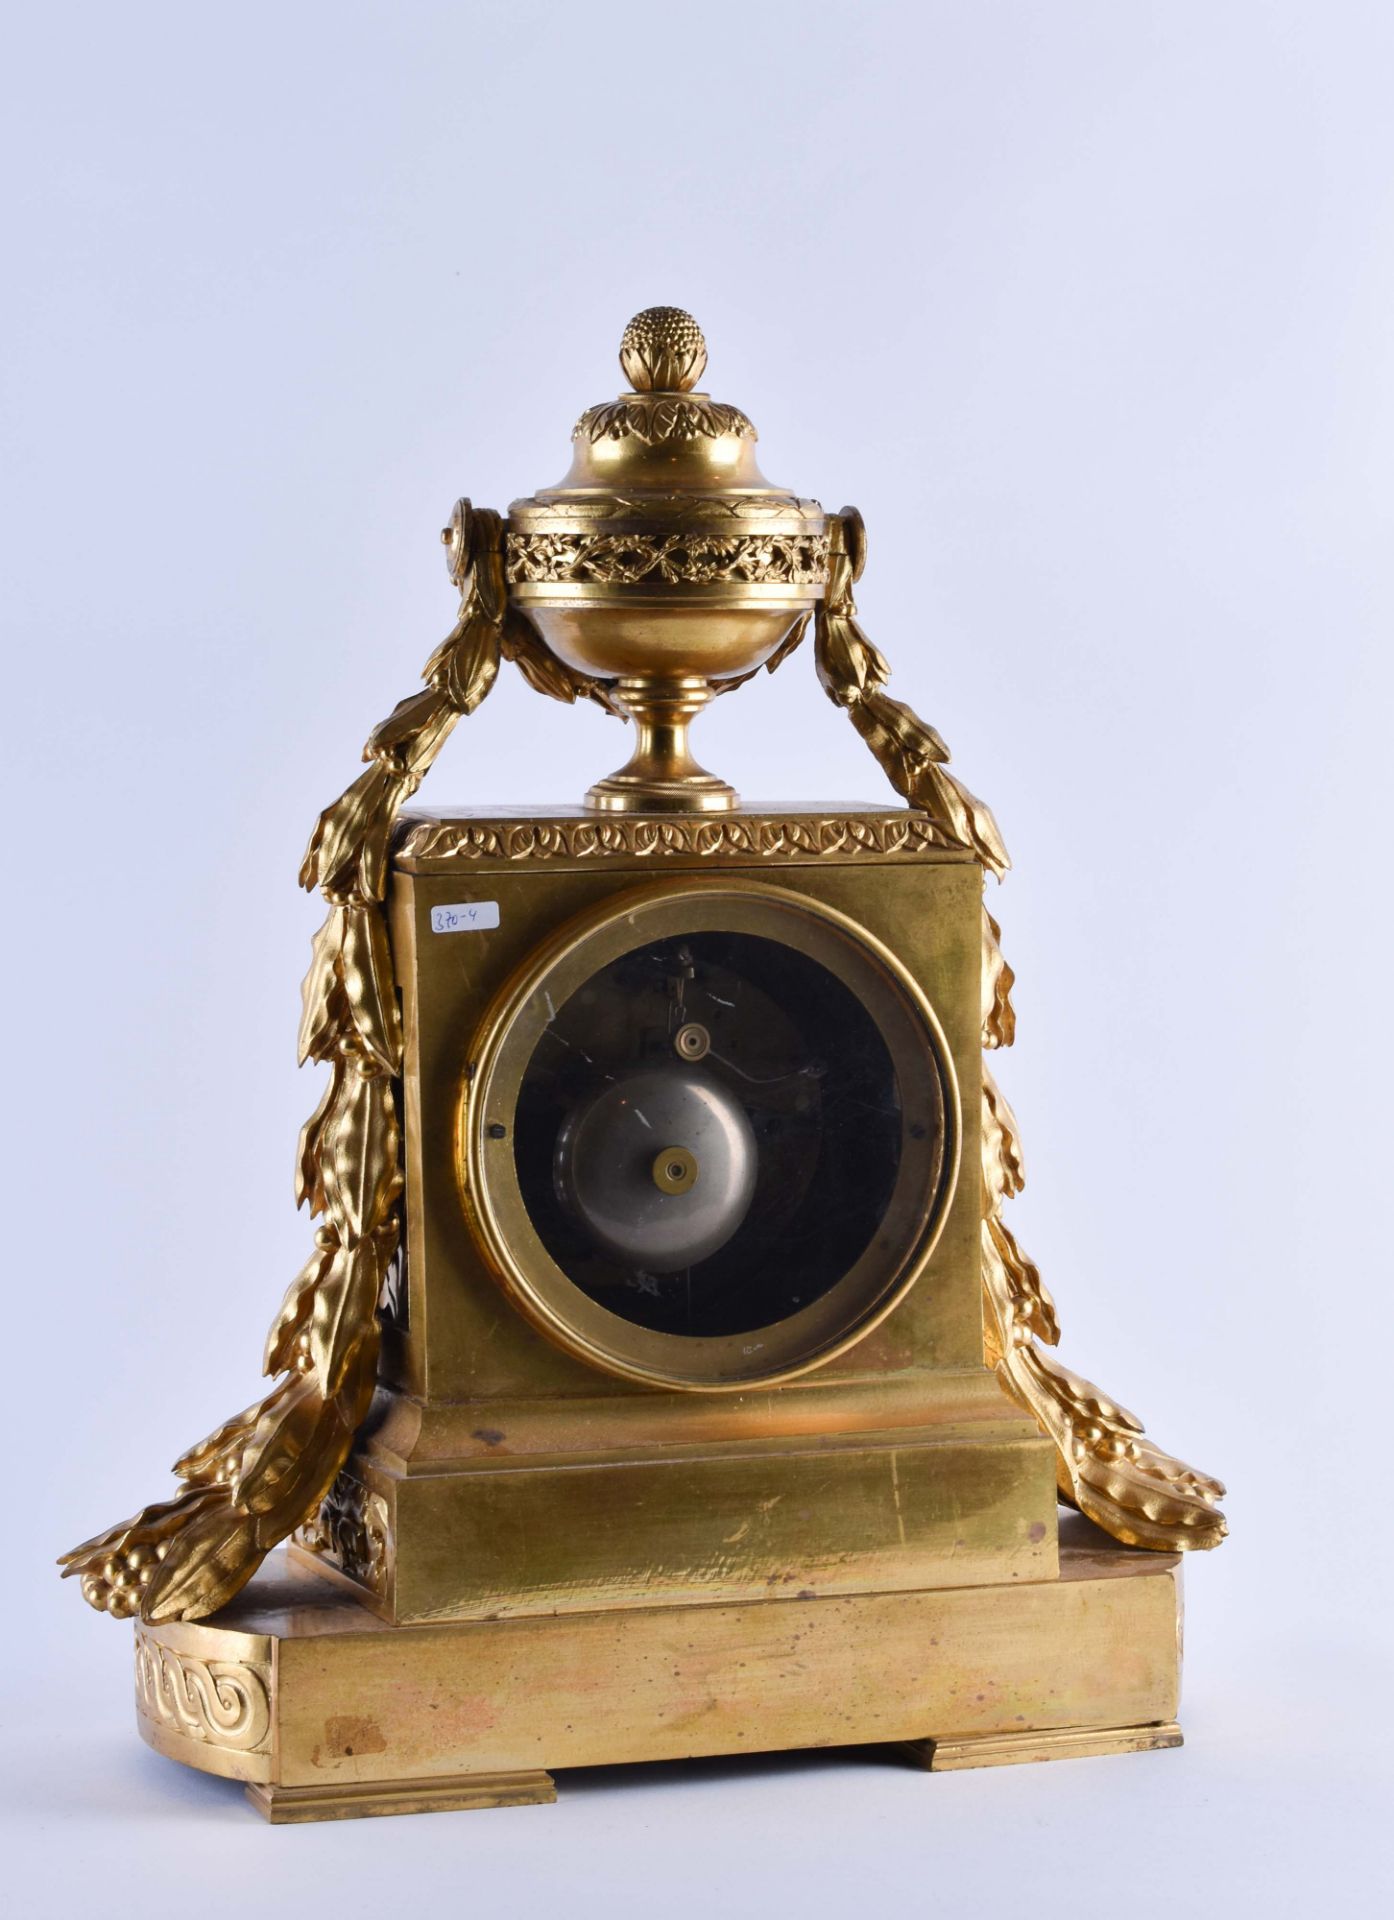 Empire clock, France around 1800 - Image 4 of 5